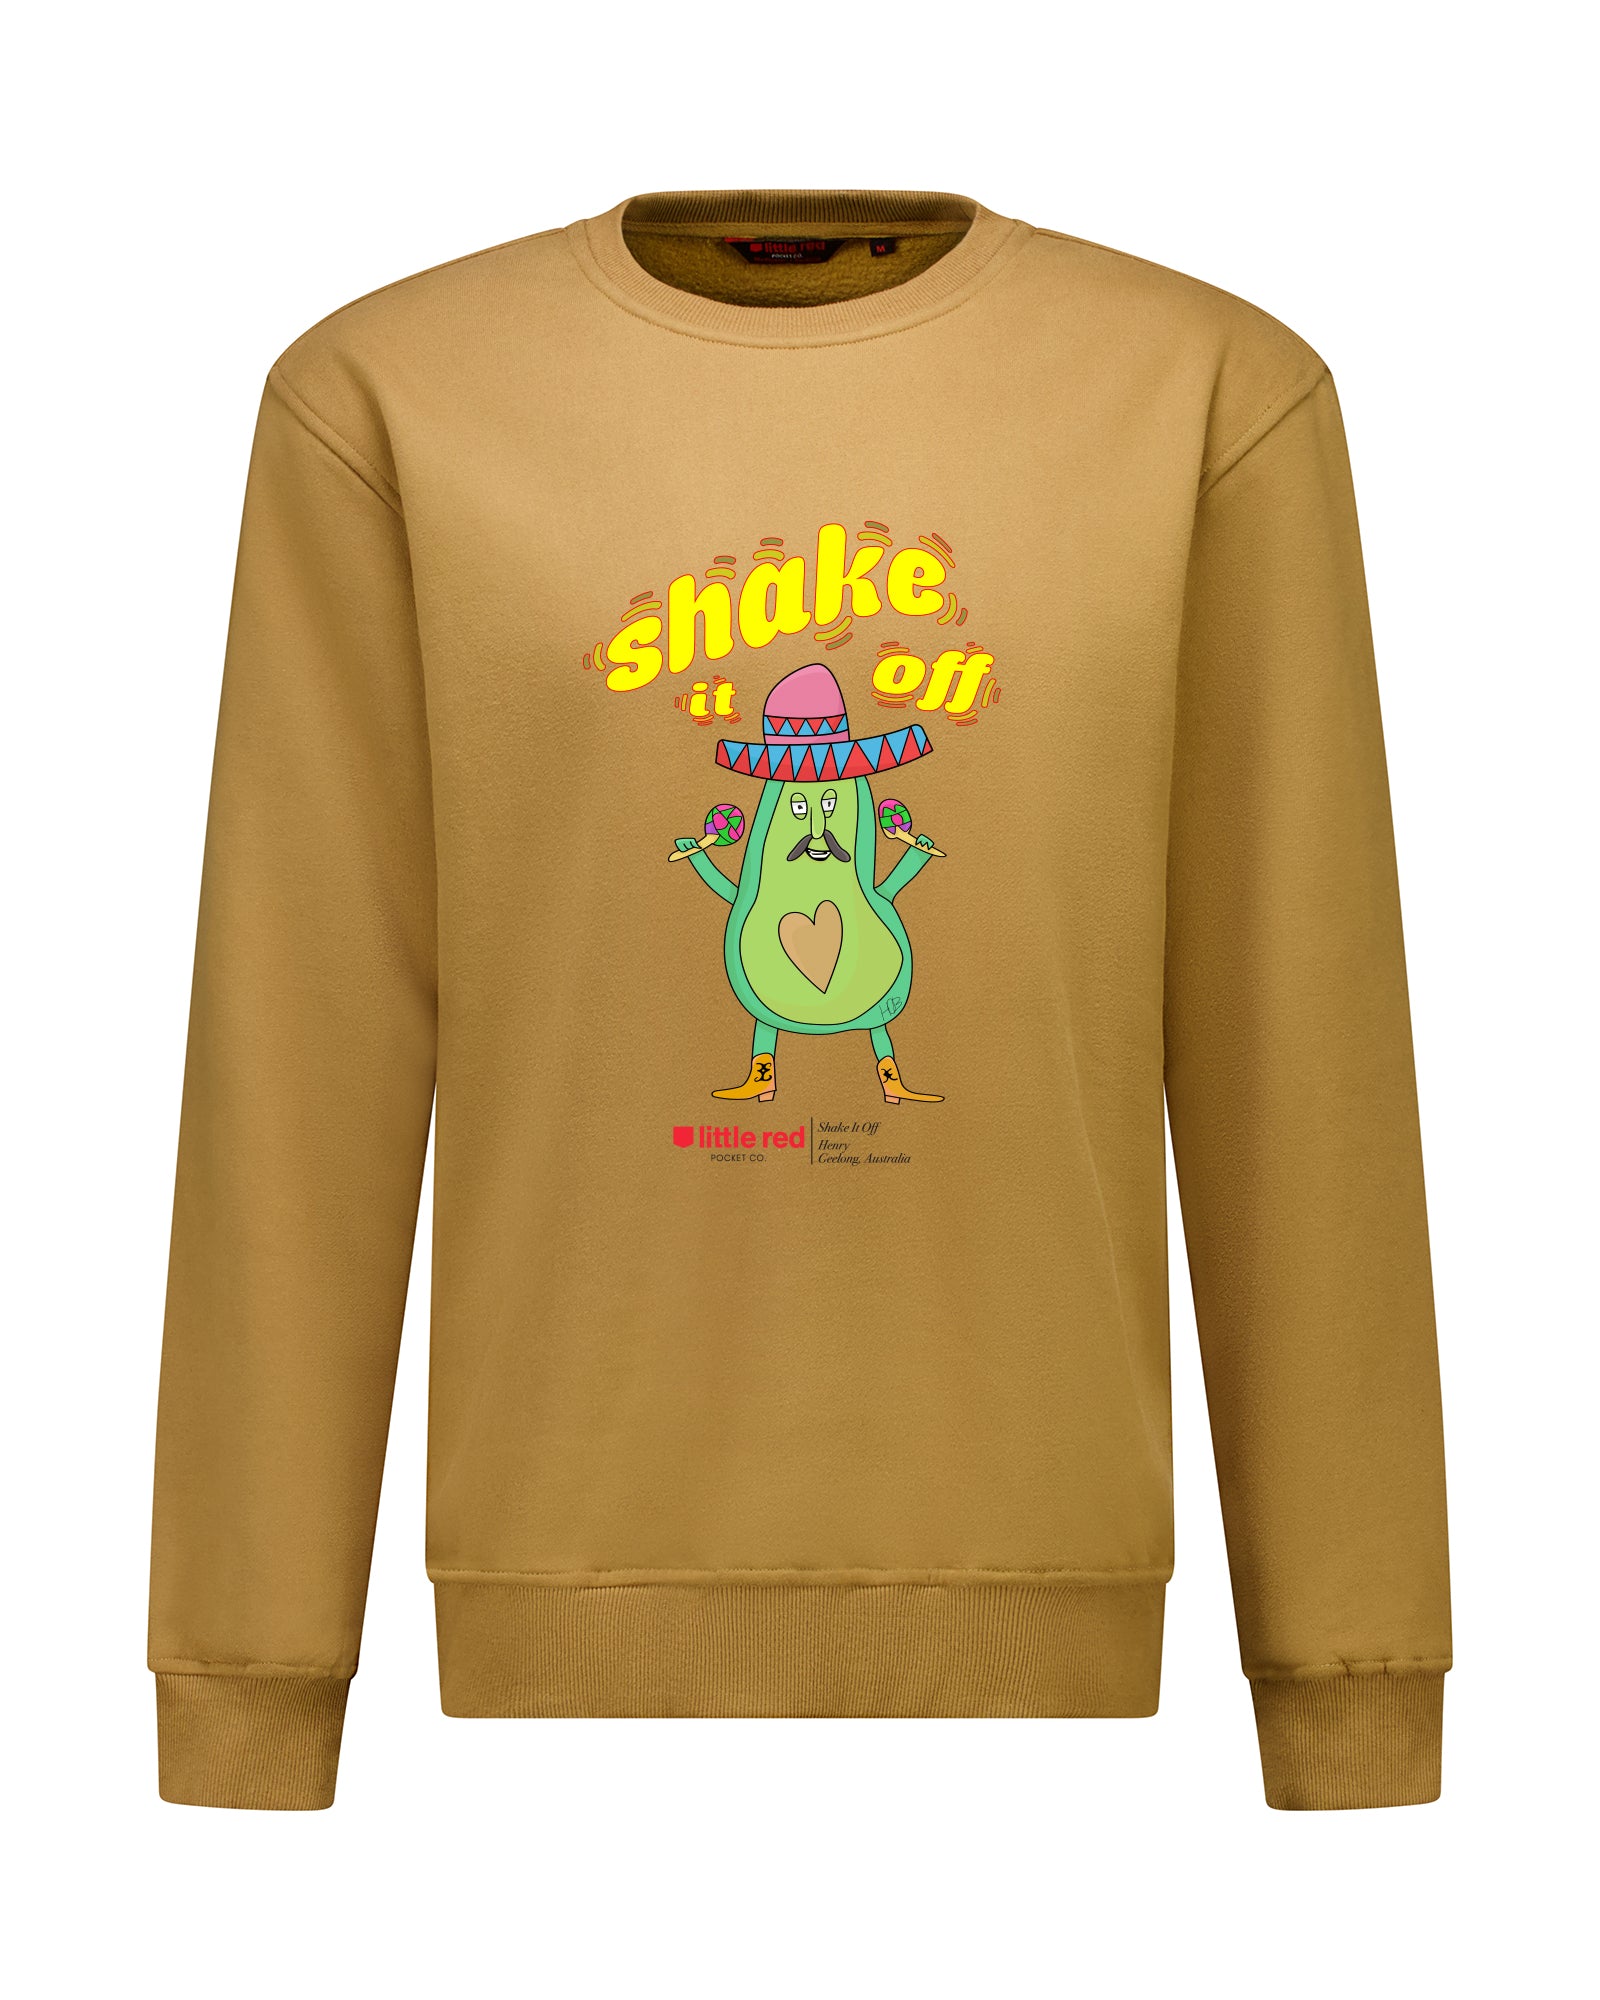 "Shake It Off" Kids Crewneck Sweater - (Unisex)